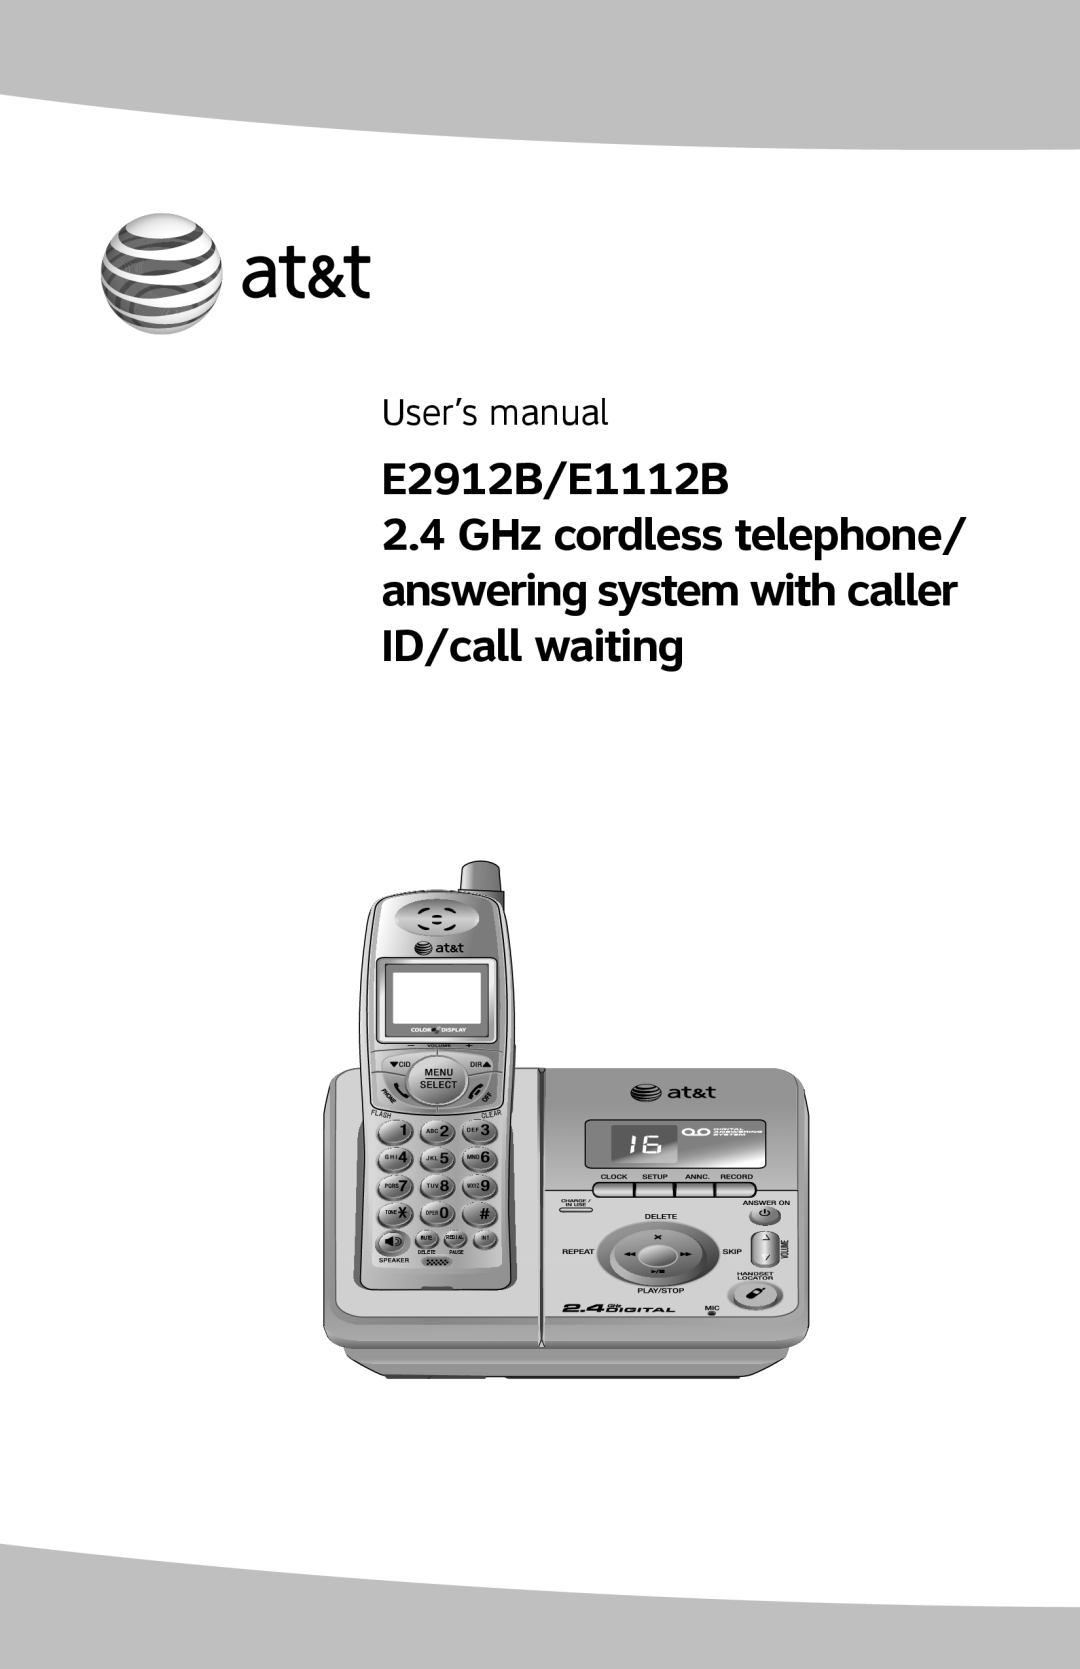 AT&T user manual E2912B/E1112B, User’s manual, Flash, Clear, Tone, Mute, Redial, Delete, Pause 